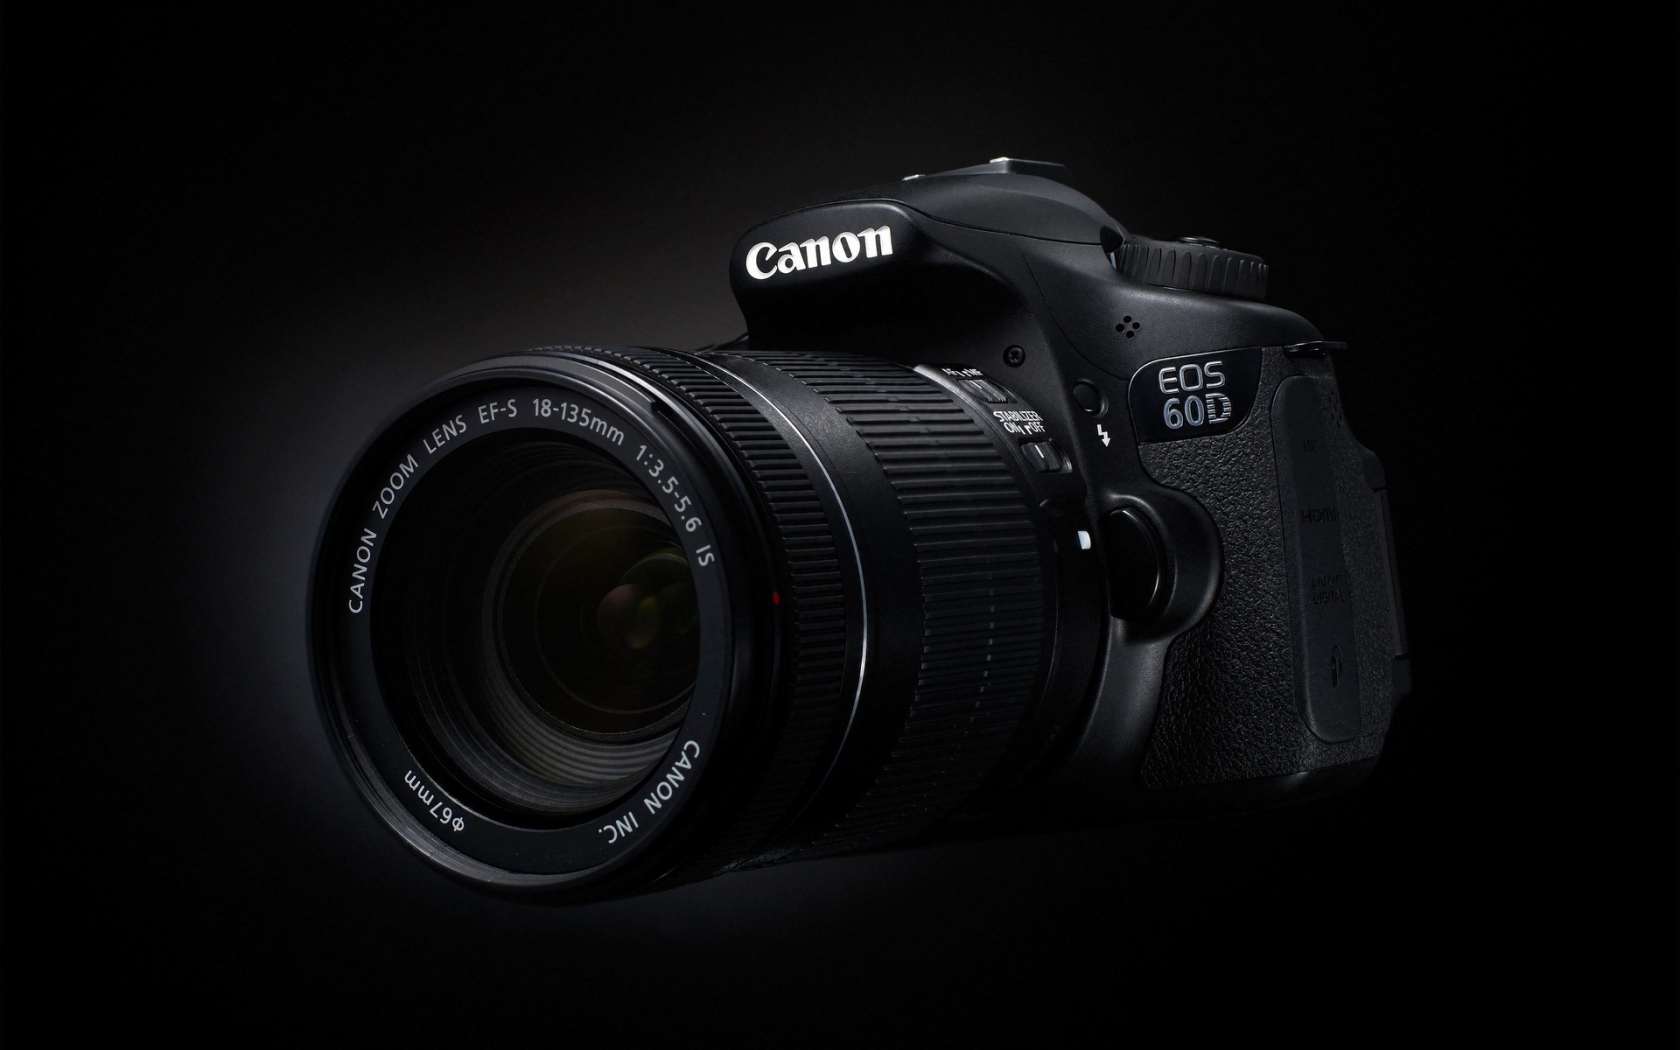 Canon EOS 60D for 1680 x 1050 widescreen resolution